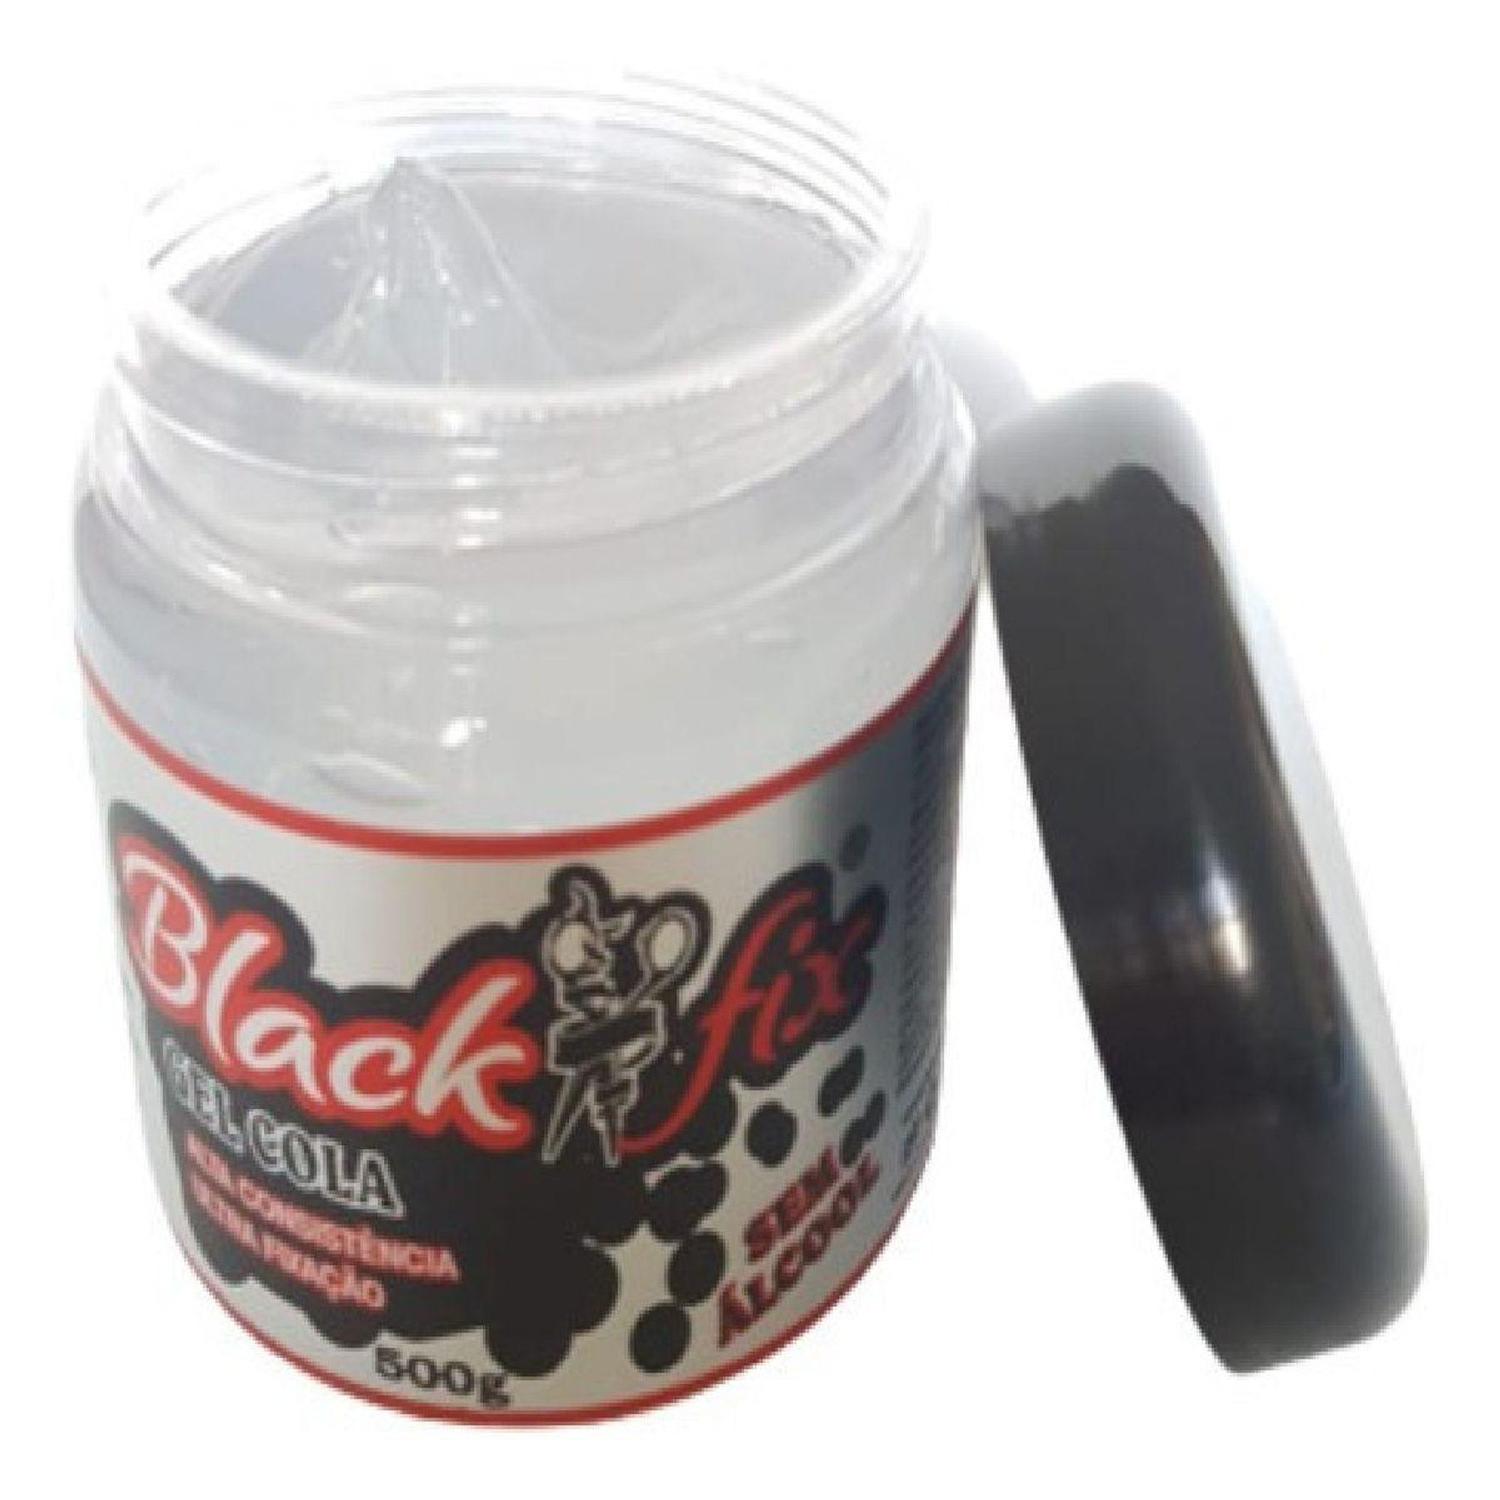 Gel cola black fix 500g